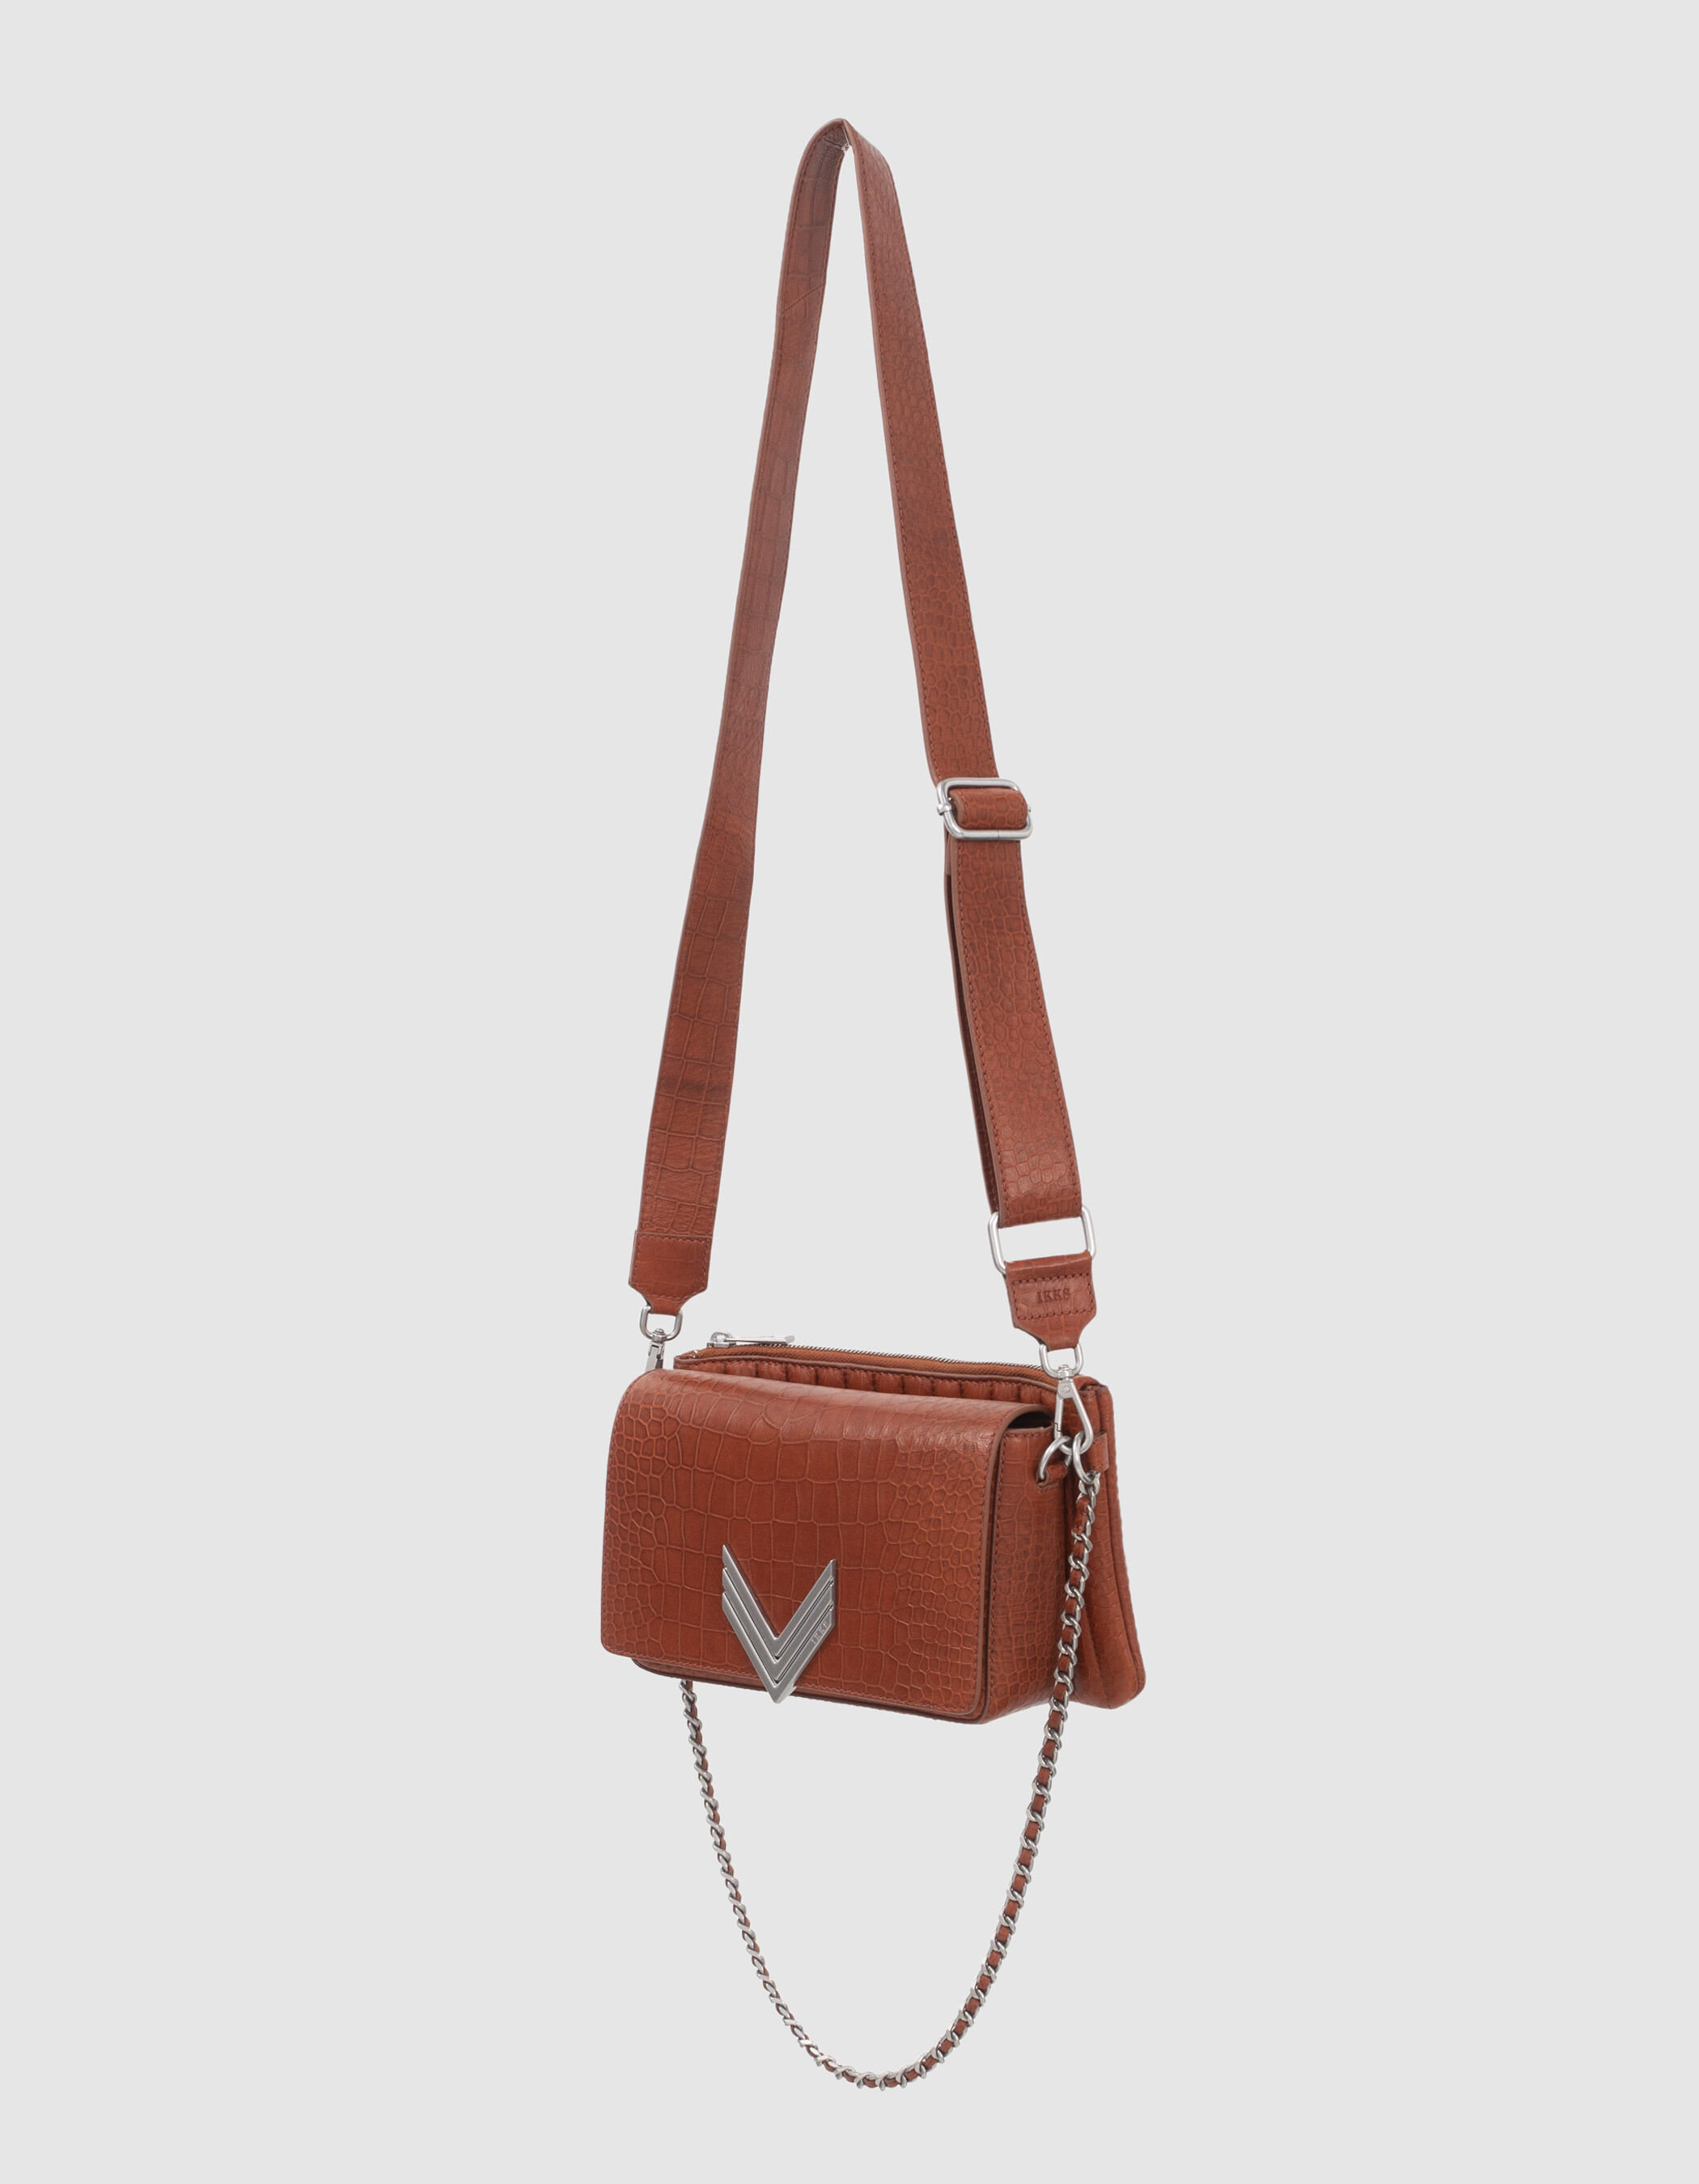 Women's orange croc-embossed leather WEST VILLAGE 111 bag